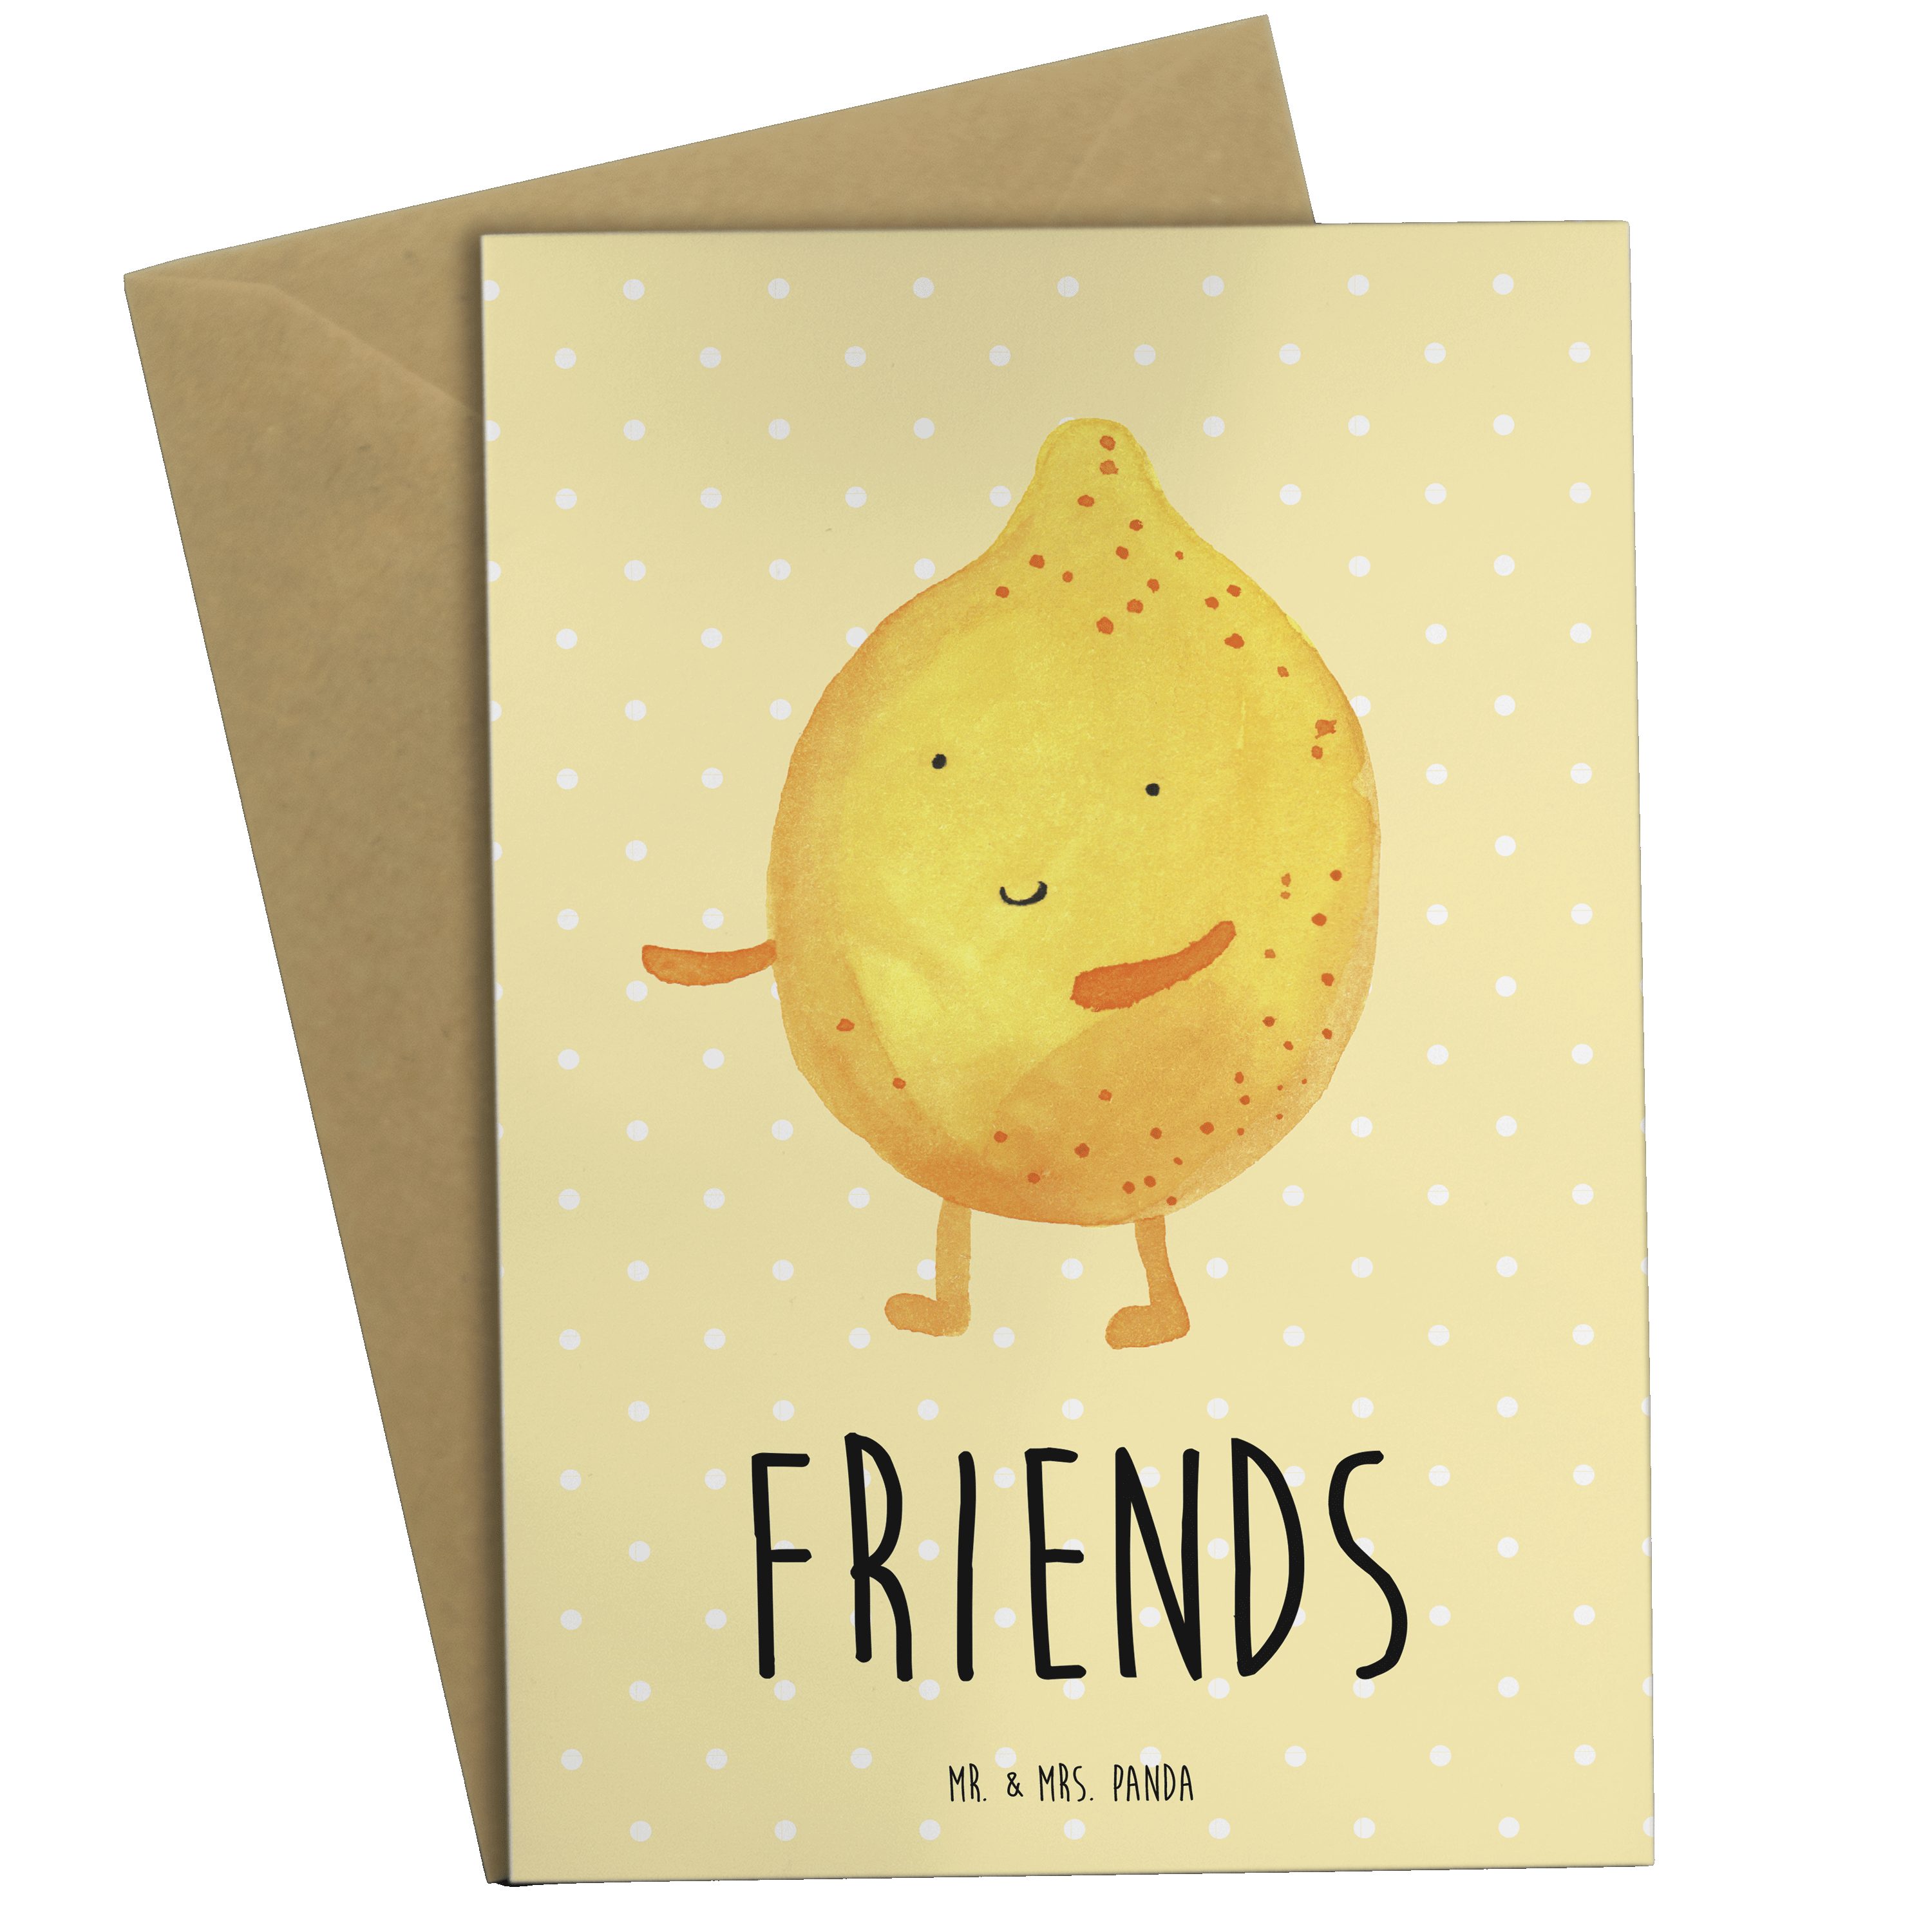 Mr. & Mrs. Panda Grußkarte BestFriends-Lemon - Gelb Pastell - Geschenk, Glückwunschkarte, lustig